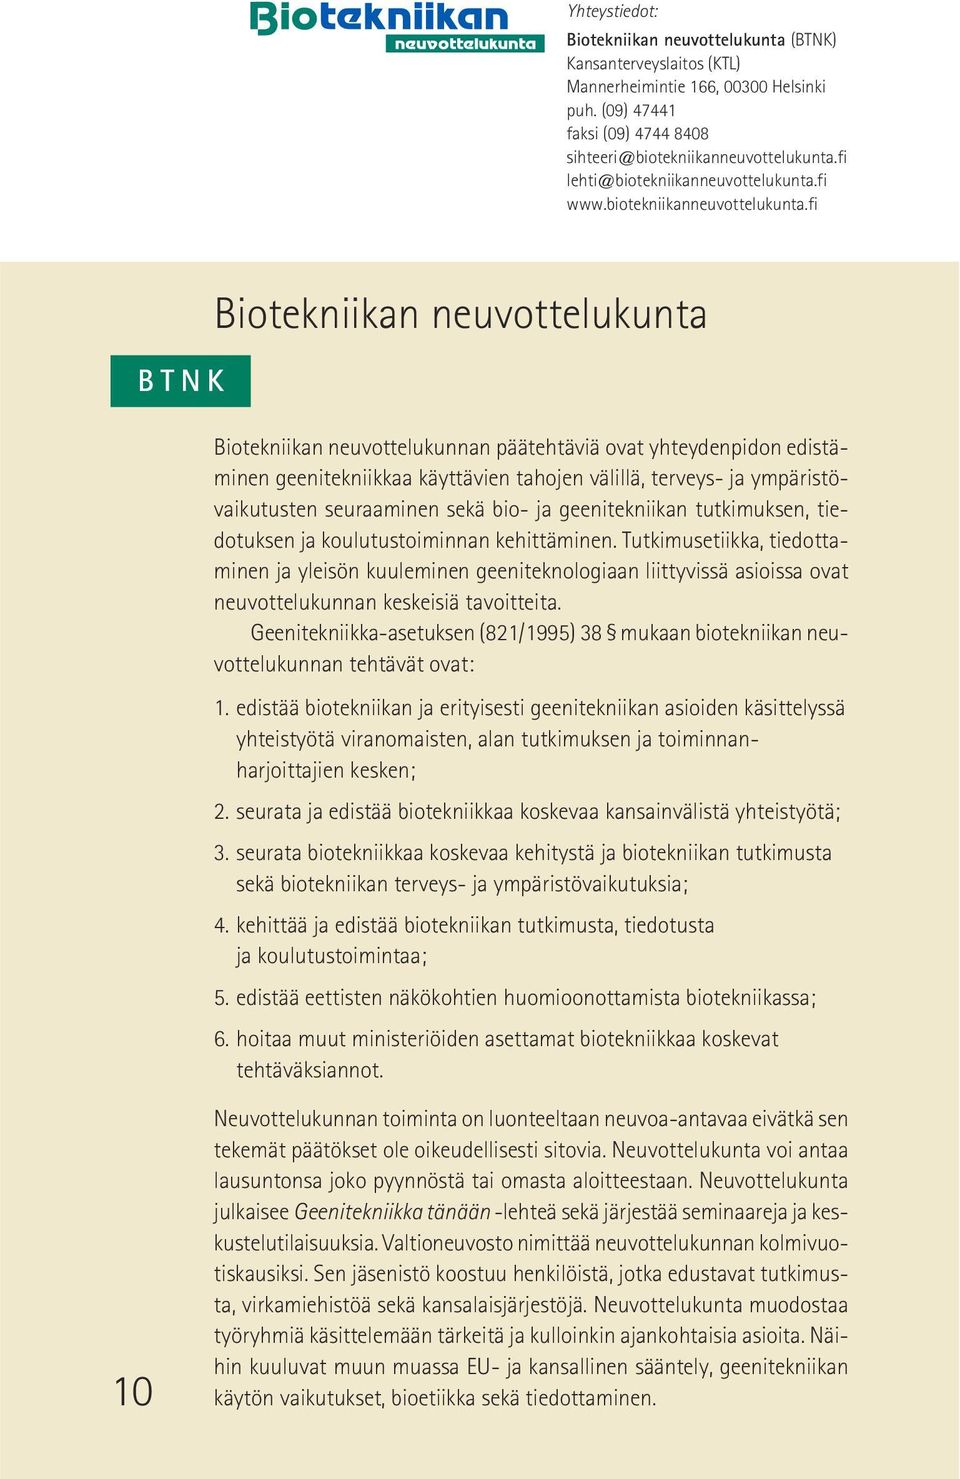 fi www.biotekniikanneuvottelukunta.